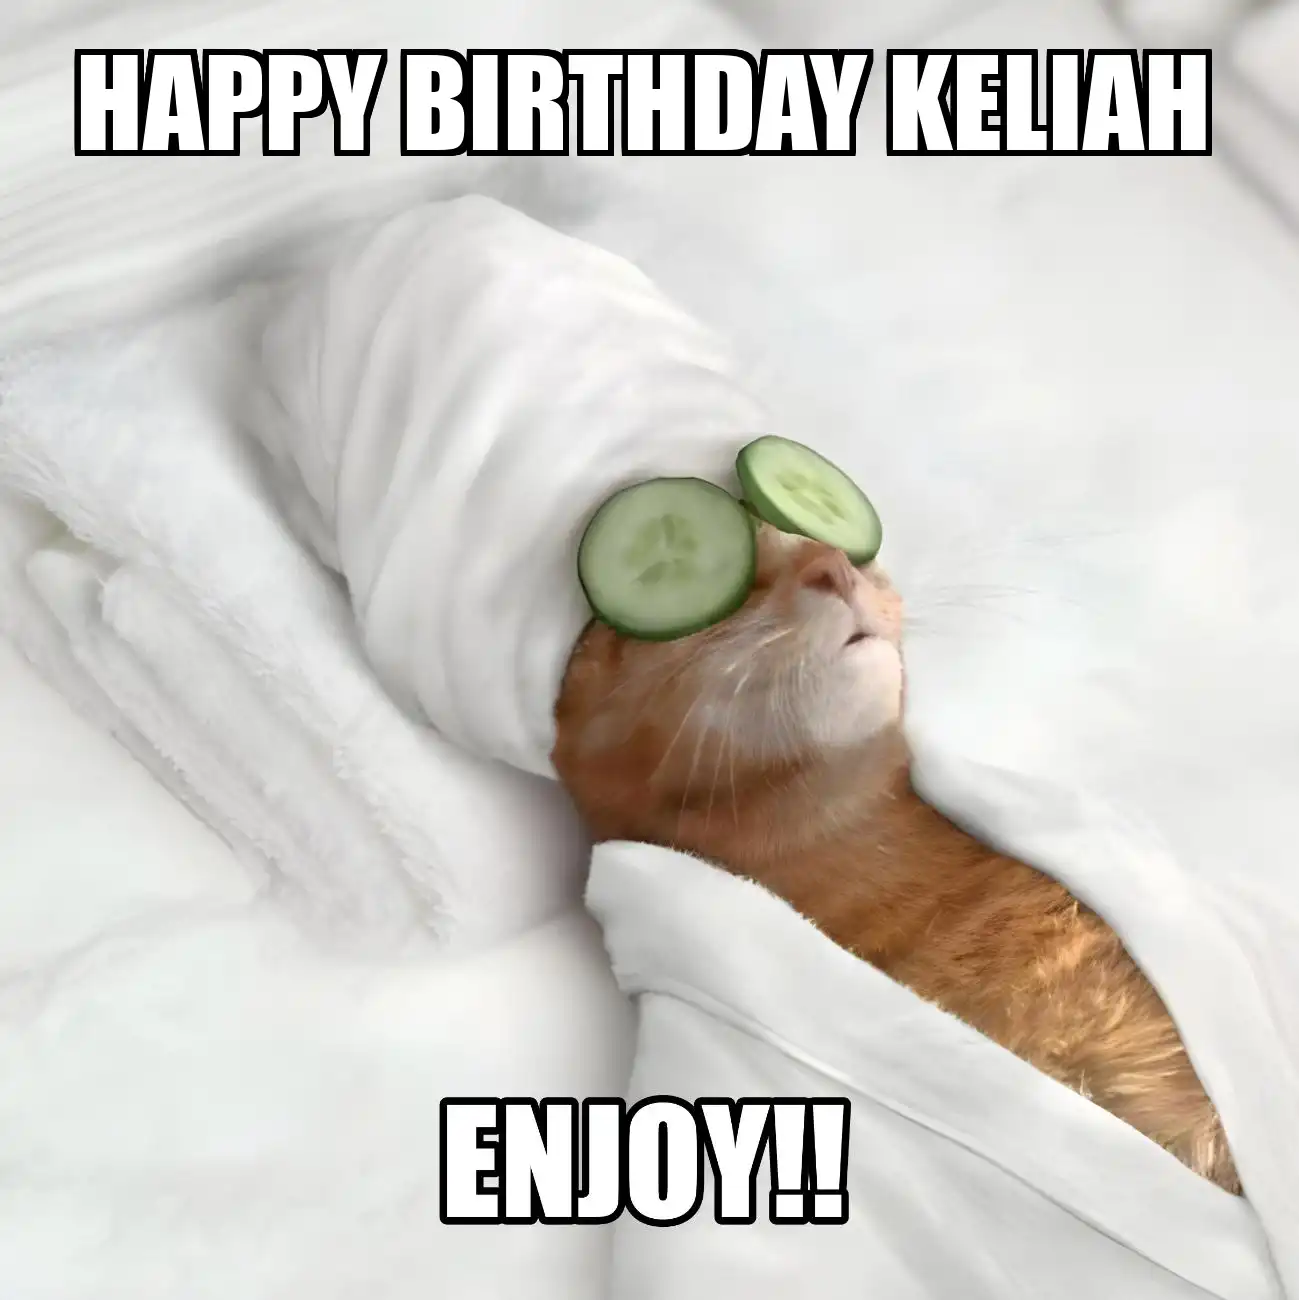 Happy Birthday Keliah Enjoy Cat Meme